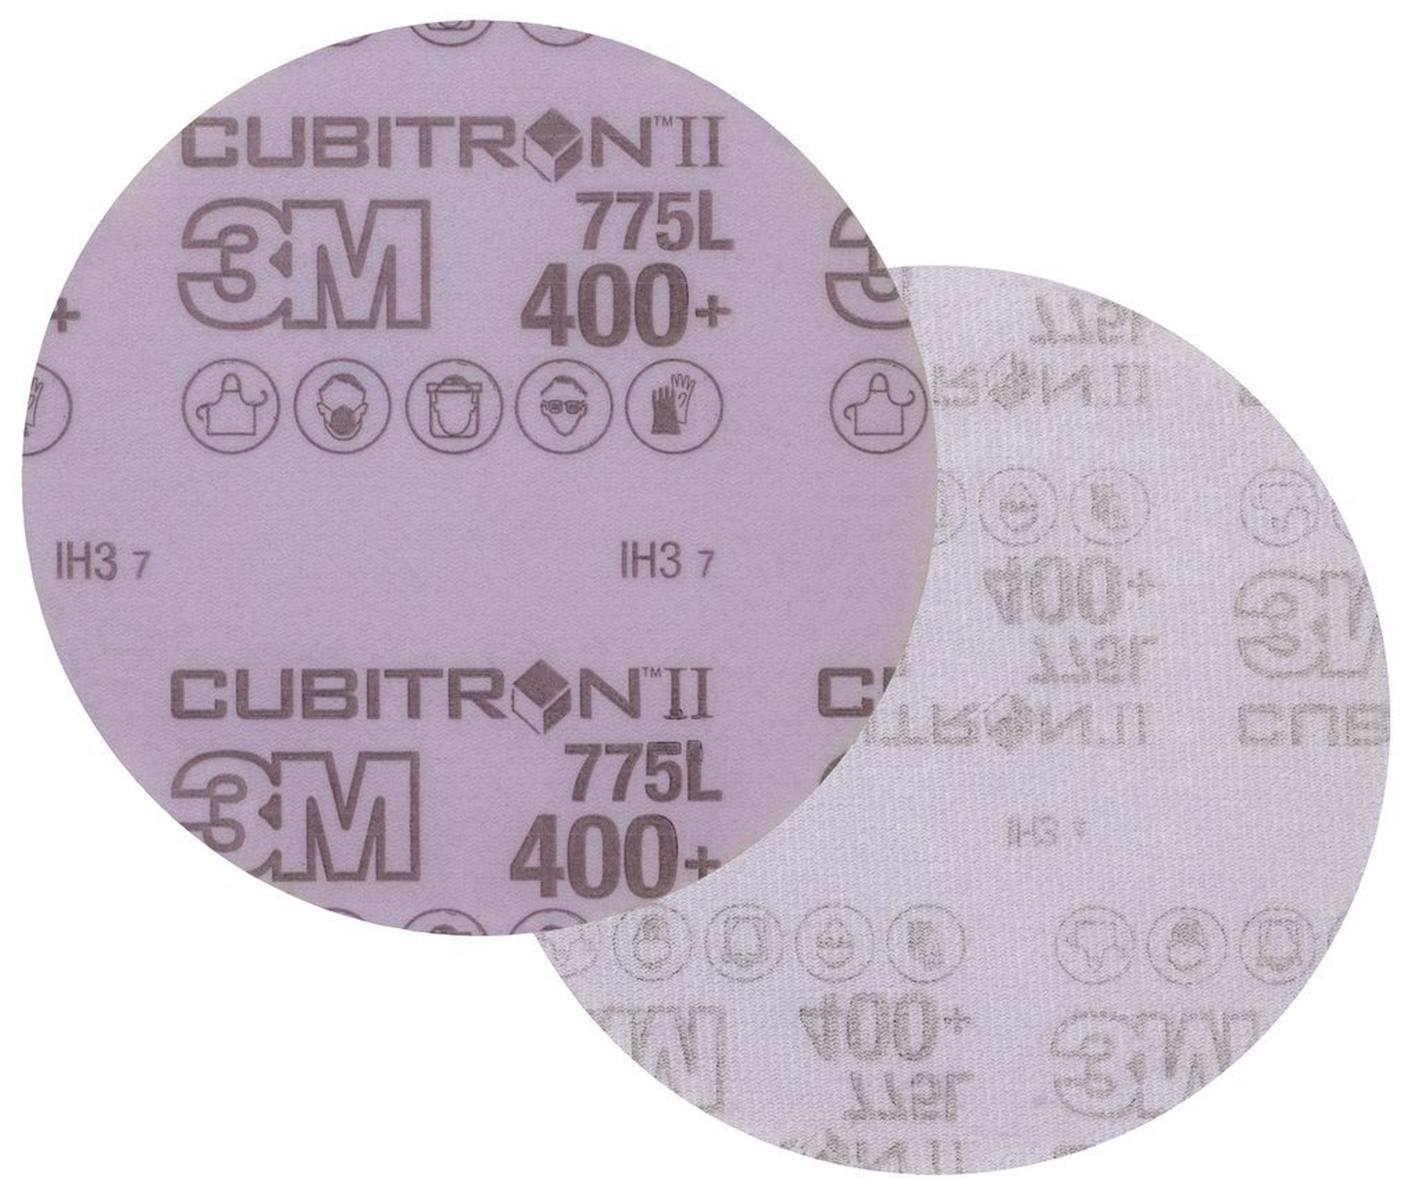 3M Cubitron II Hookit folieschijf 775L, 125 mm, 400+, ongeperforeerd #05055